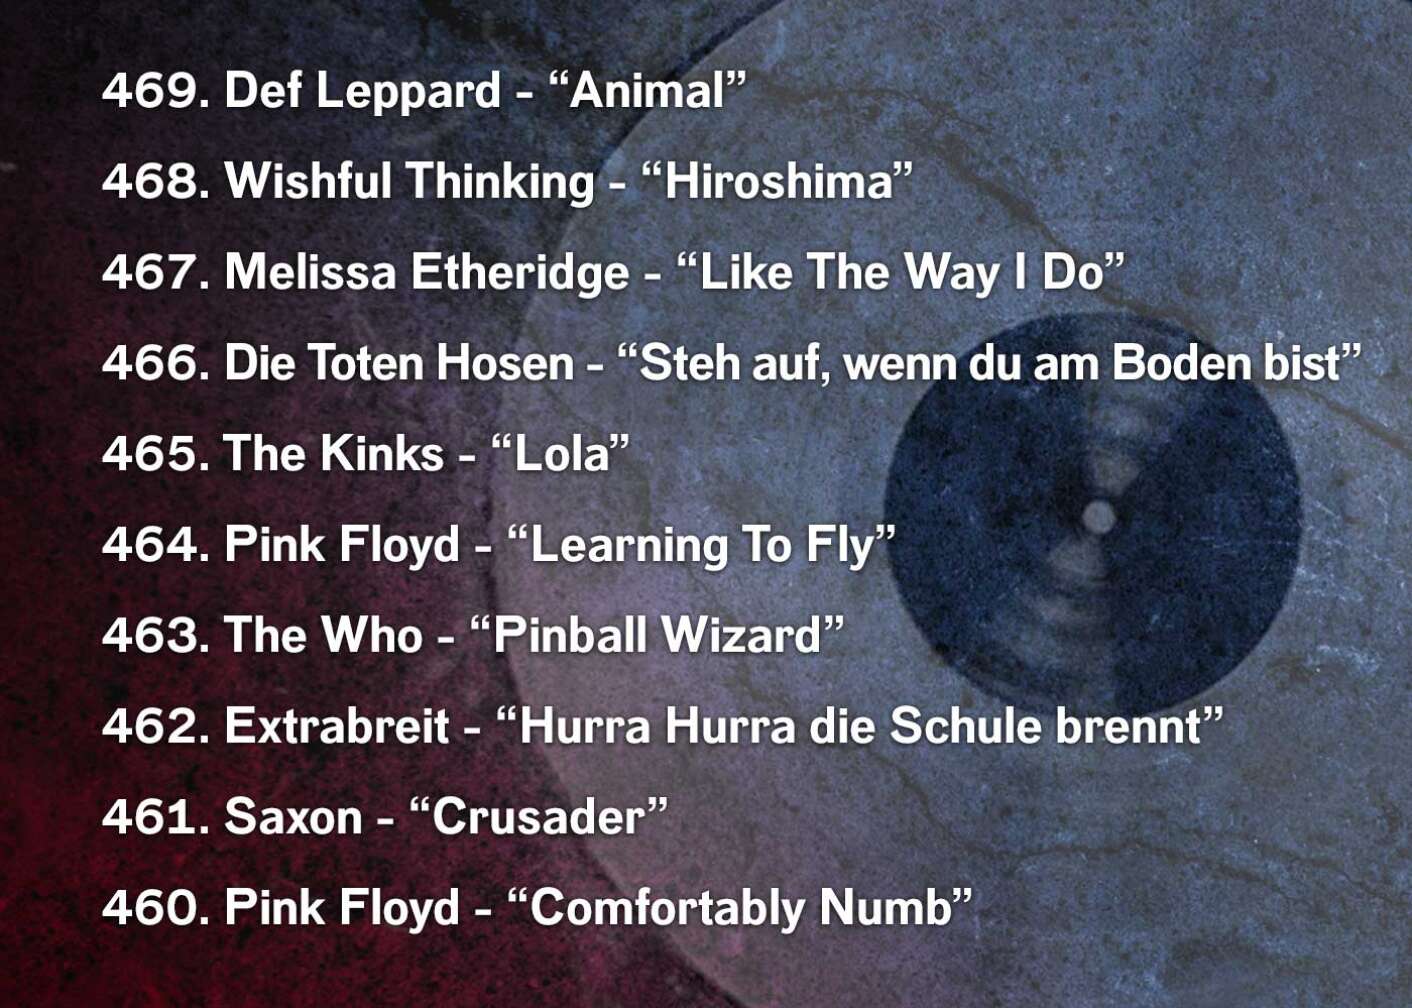 469. Def Leppard - “Animal” 468. Wishful Thinking - “Hiroshima” 467. Melissa Etheridge - “Like The Way I Do” 466. Die Toten Hosen - “Steh auf, wenn du am Boden bist” 465. The Kinks - “Lola” 464. Pink Floyd - “Learning To Fly” 463. The Who - “Pinball Wizard” 462. Extrabreit - “Hurra Hurra die Schule brennt” 461. Saxon - “Crusader” 460. Pink Floyd - “Comfortably Numb”